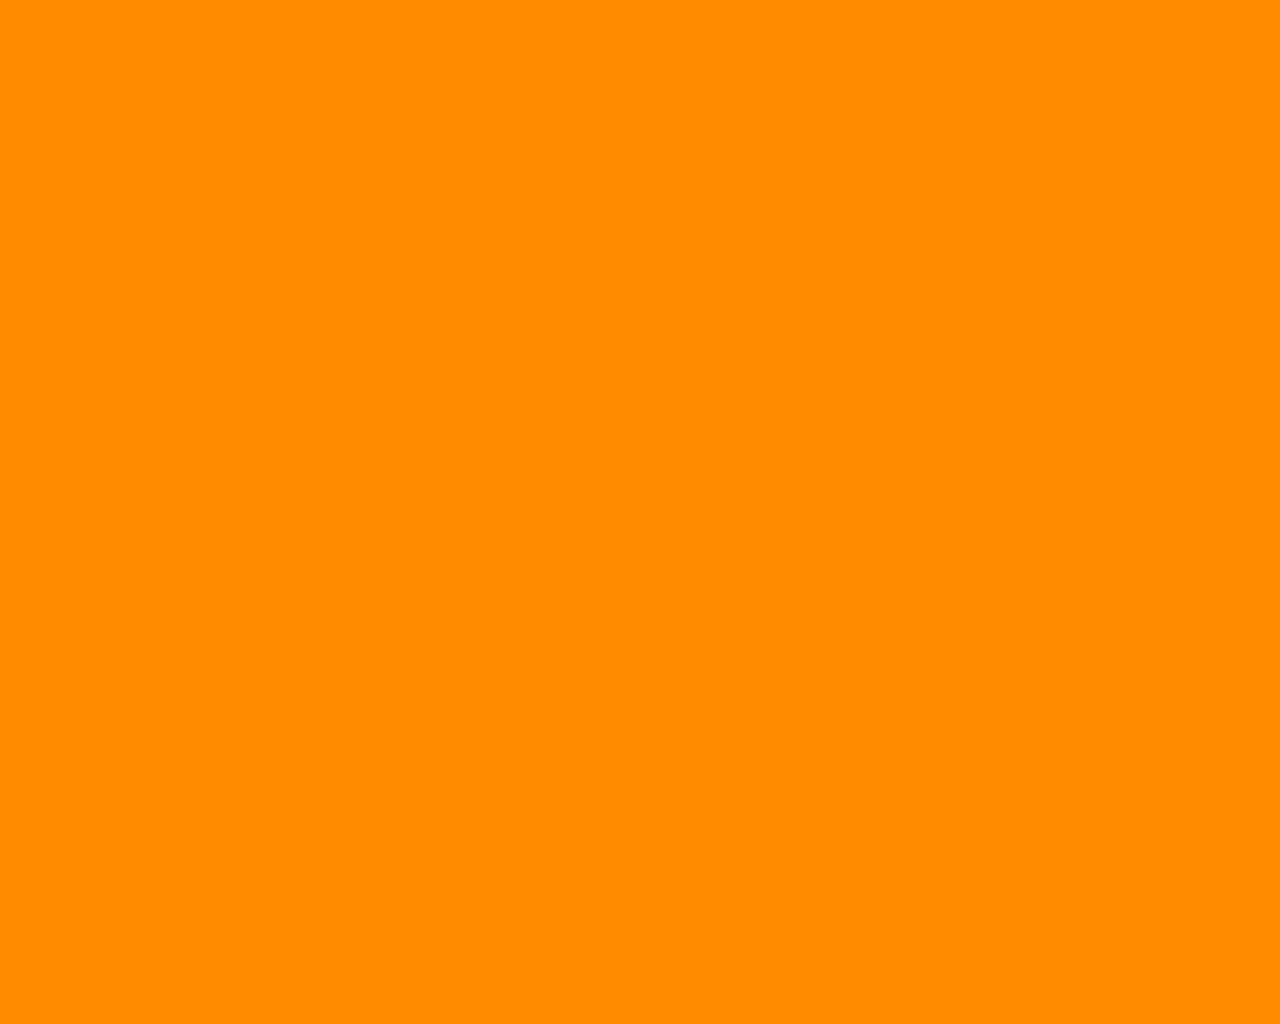 Resolution Dark Orange Solid Color Background And